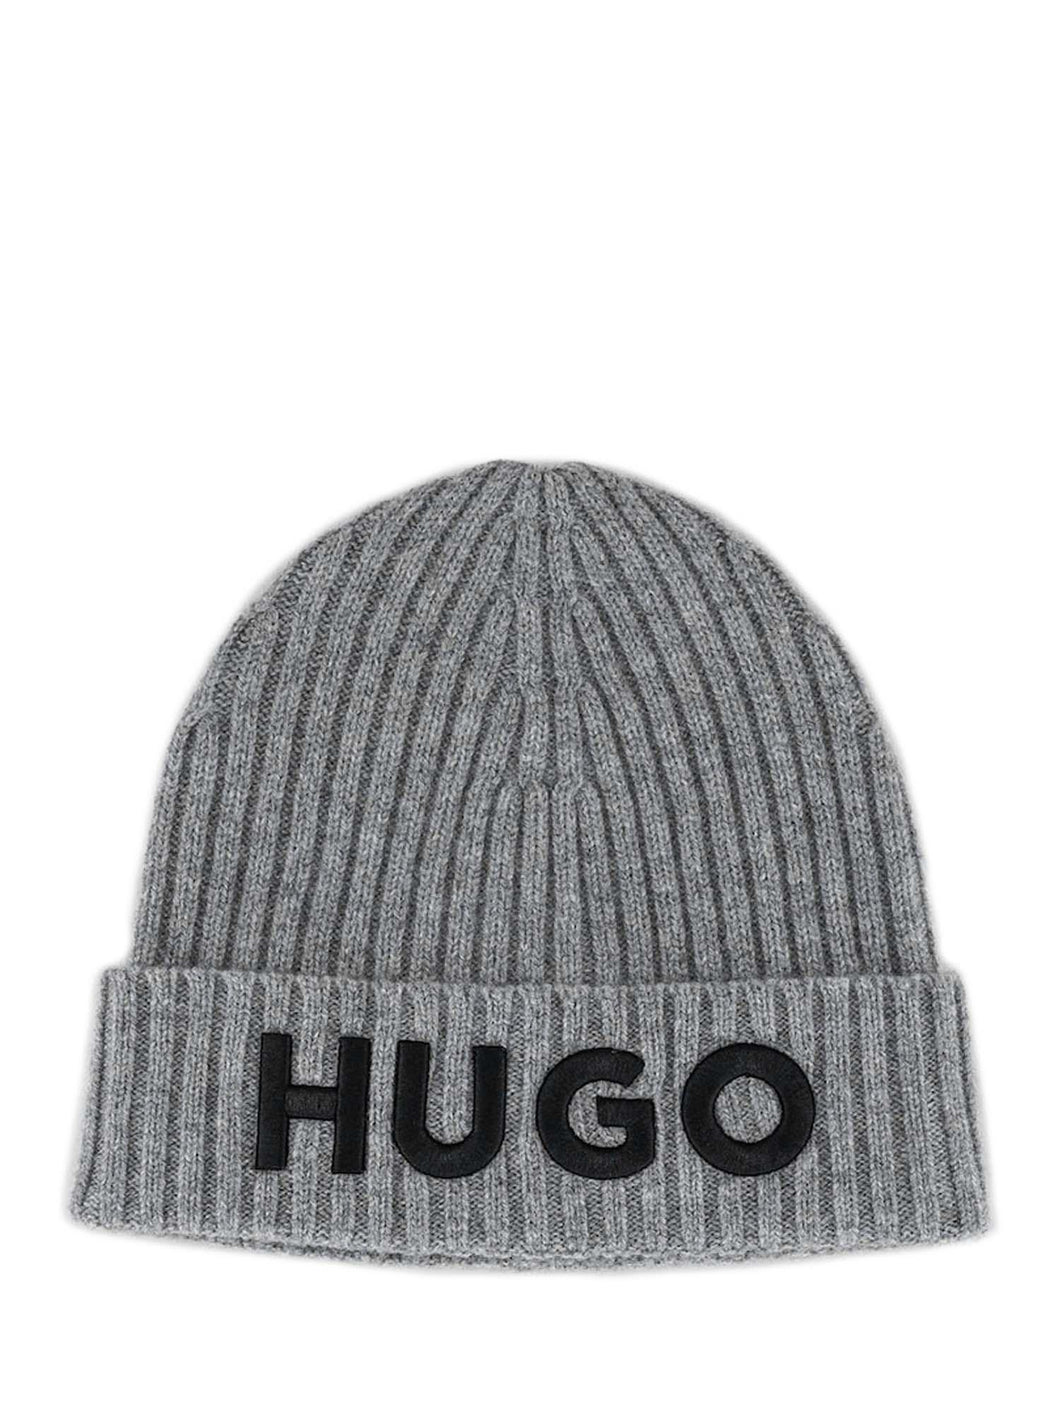 Hugo Boss Unisex Embroidered Logo Wool Beanie in Grey